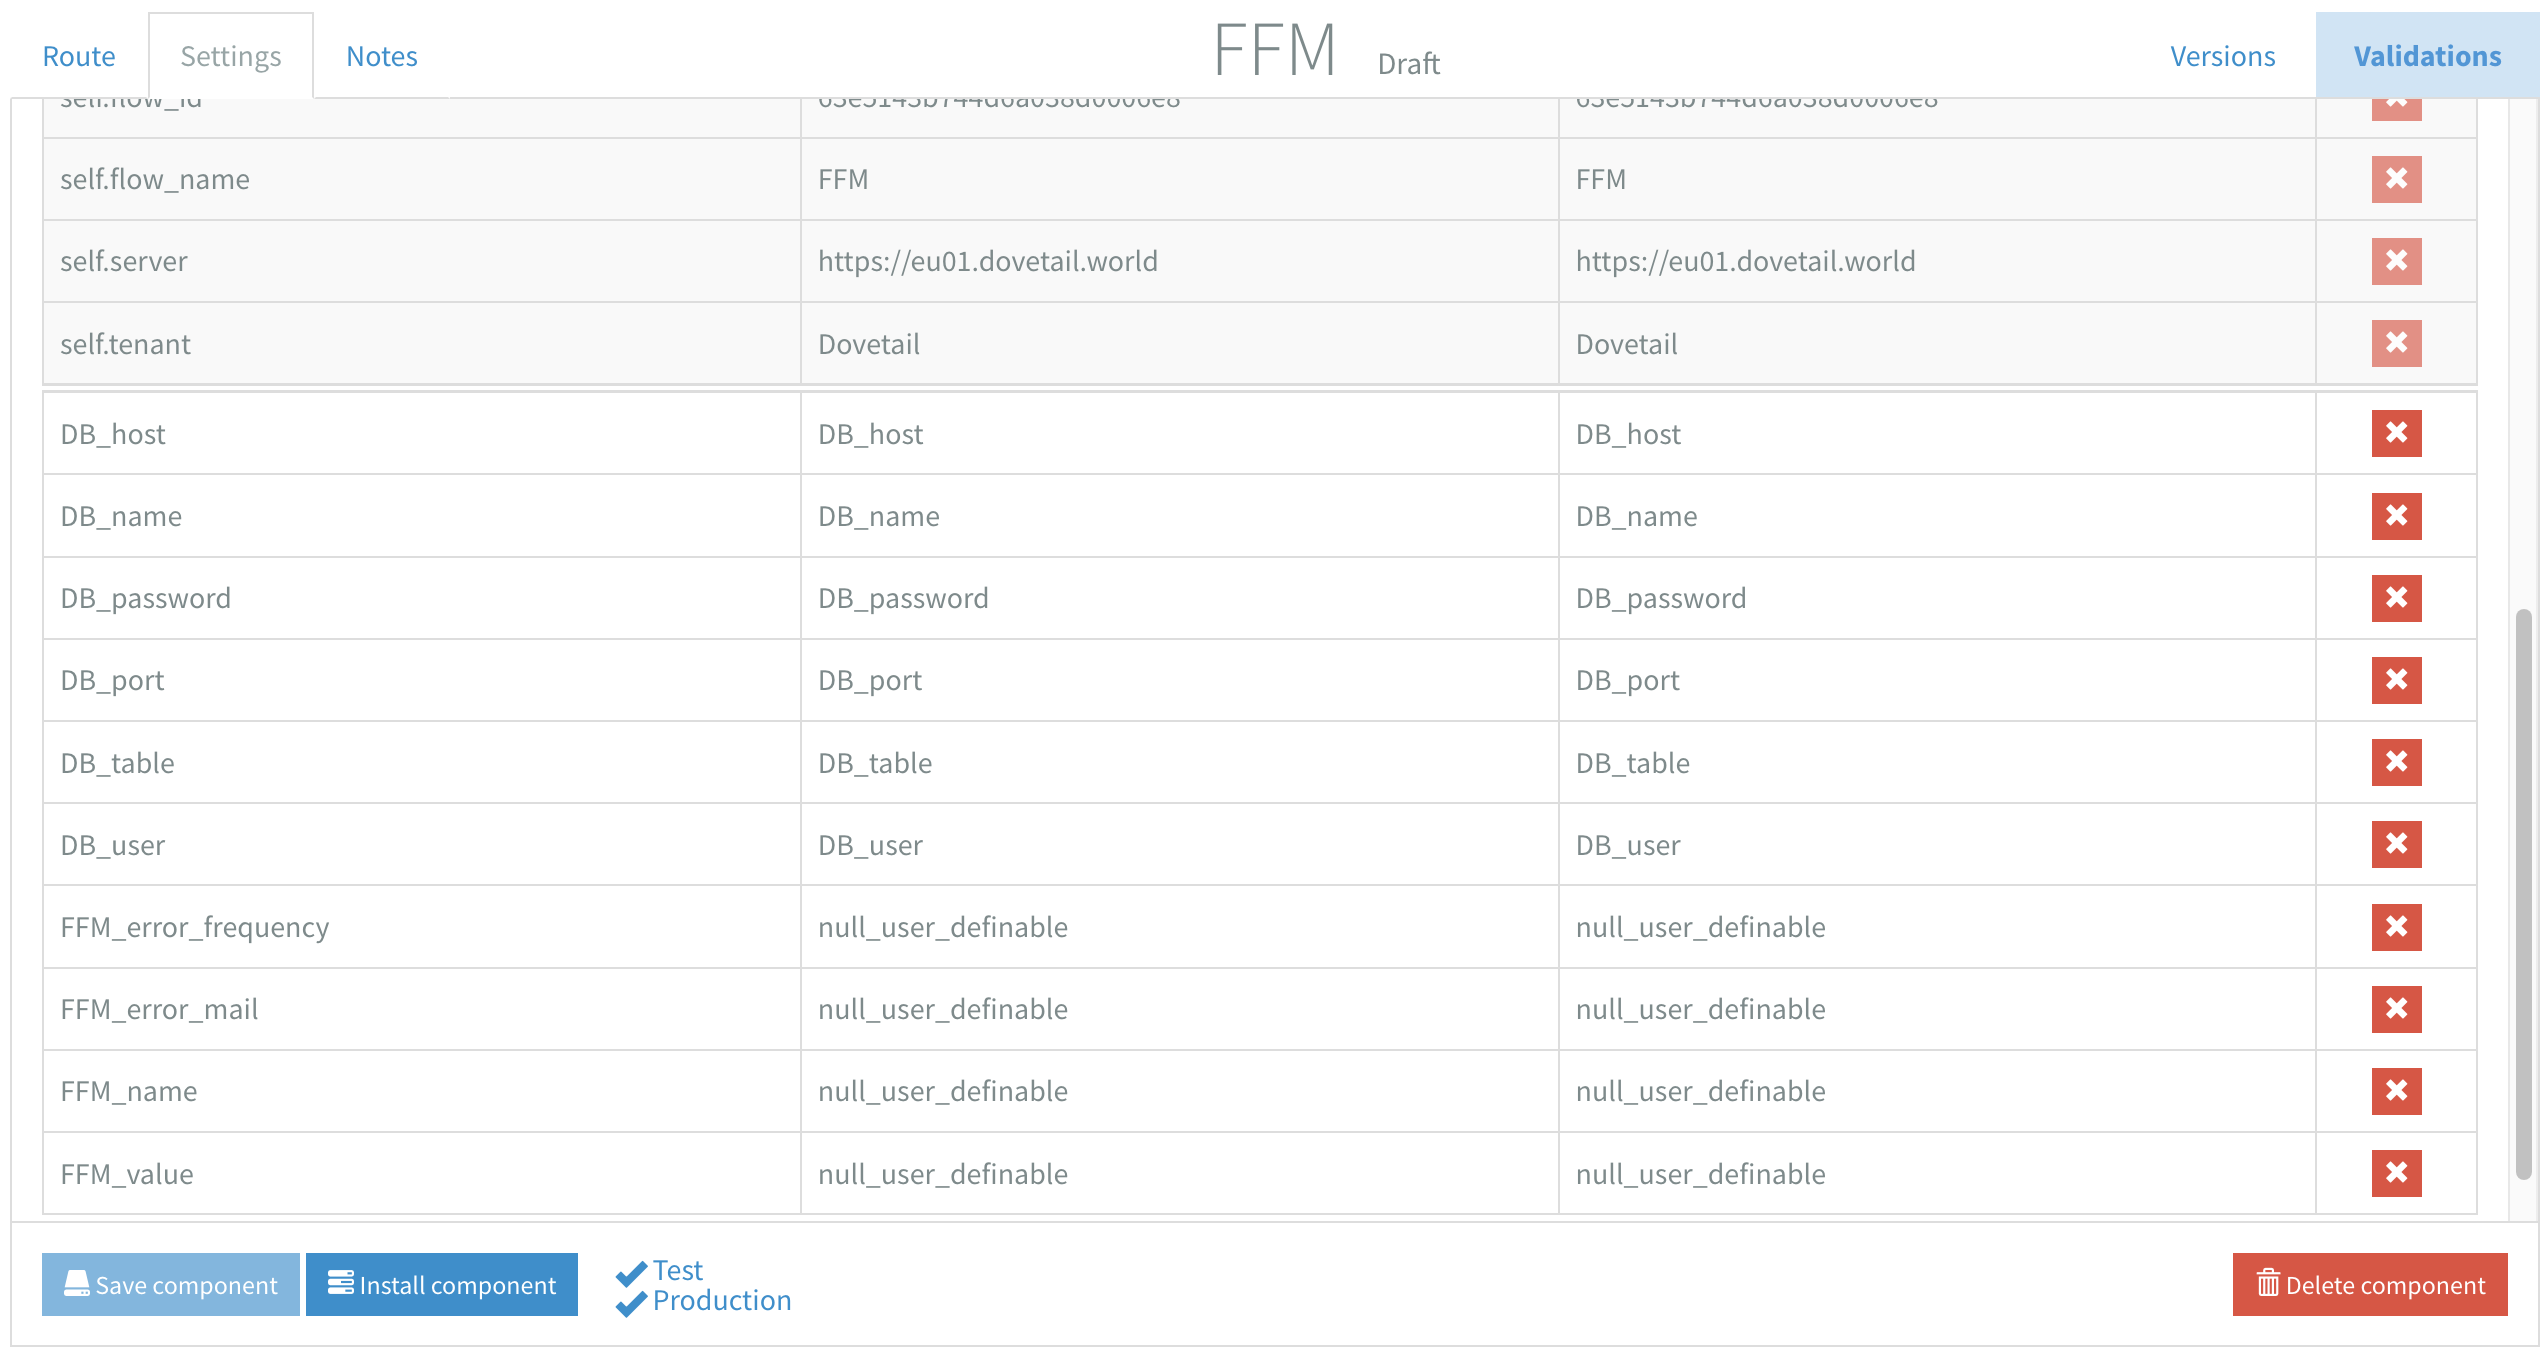 FFM Component - Flow settings